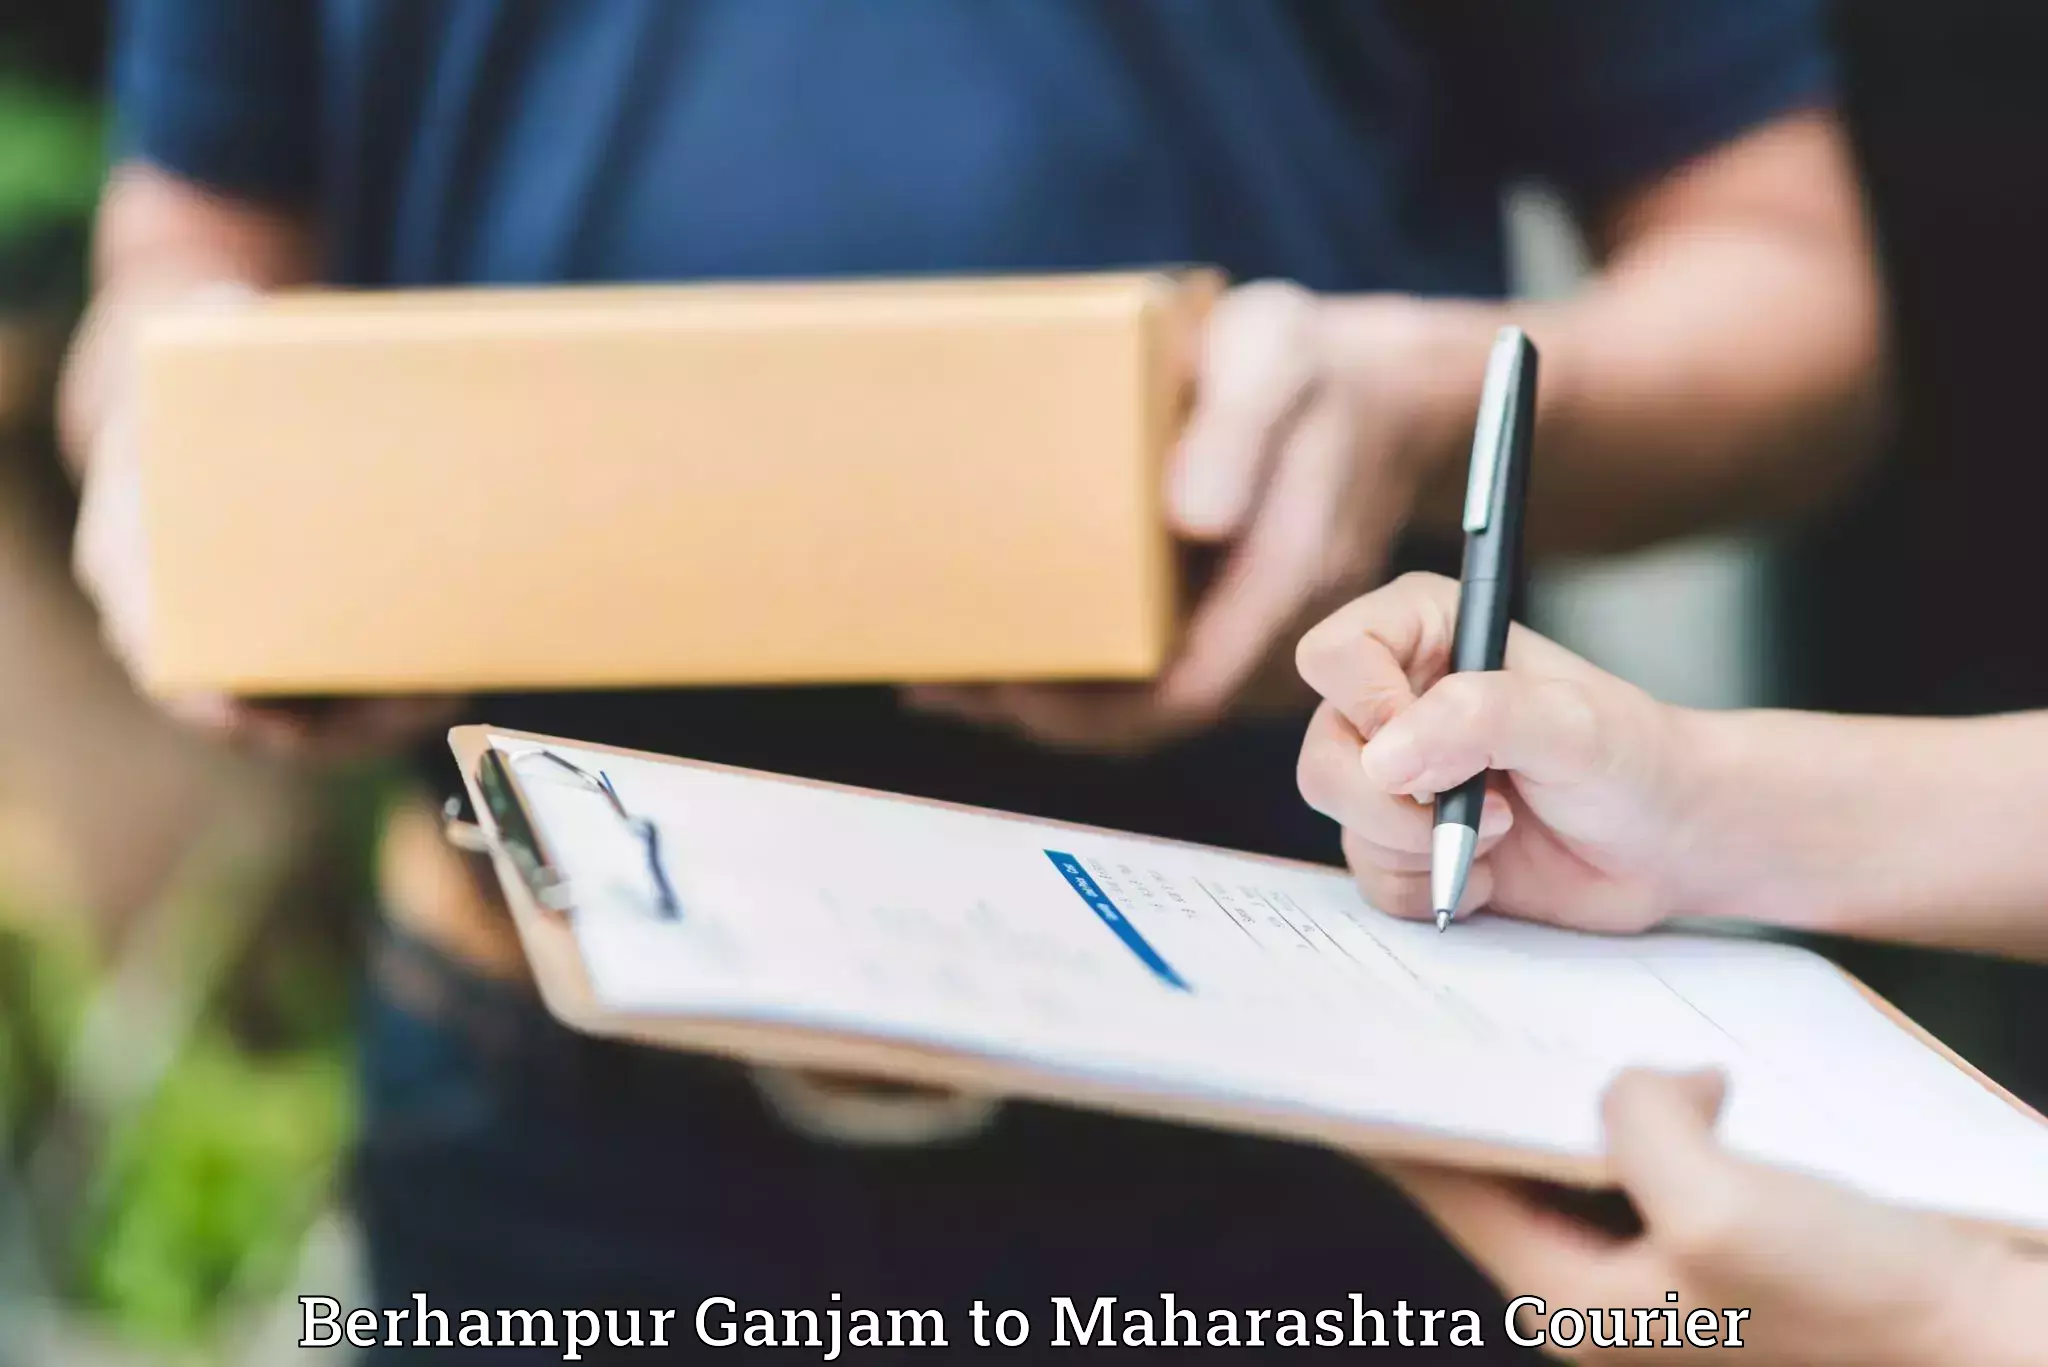 Reliable moving assistance Berhampur Ganjam to Pune